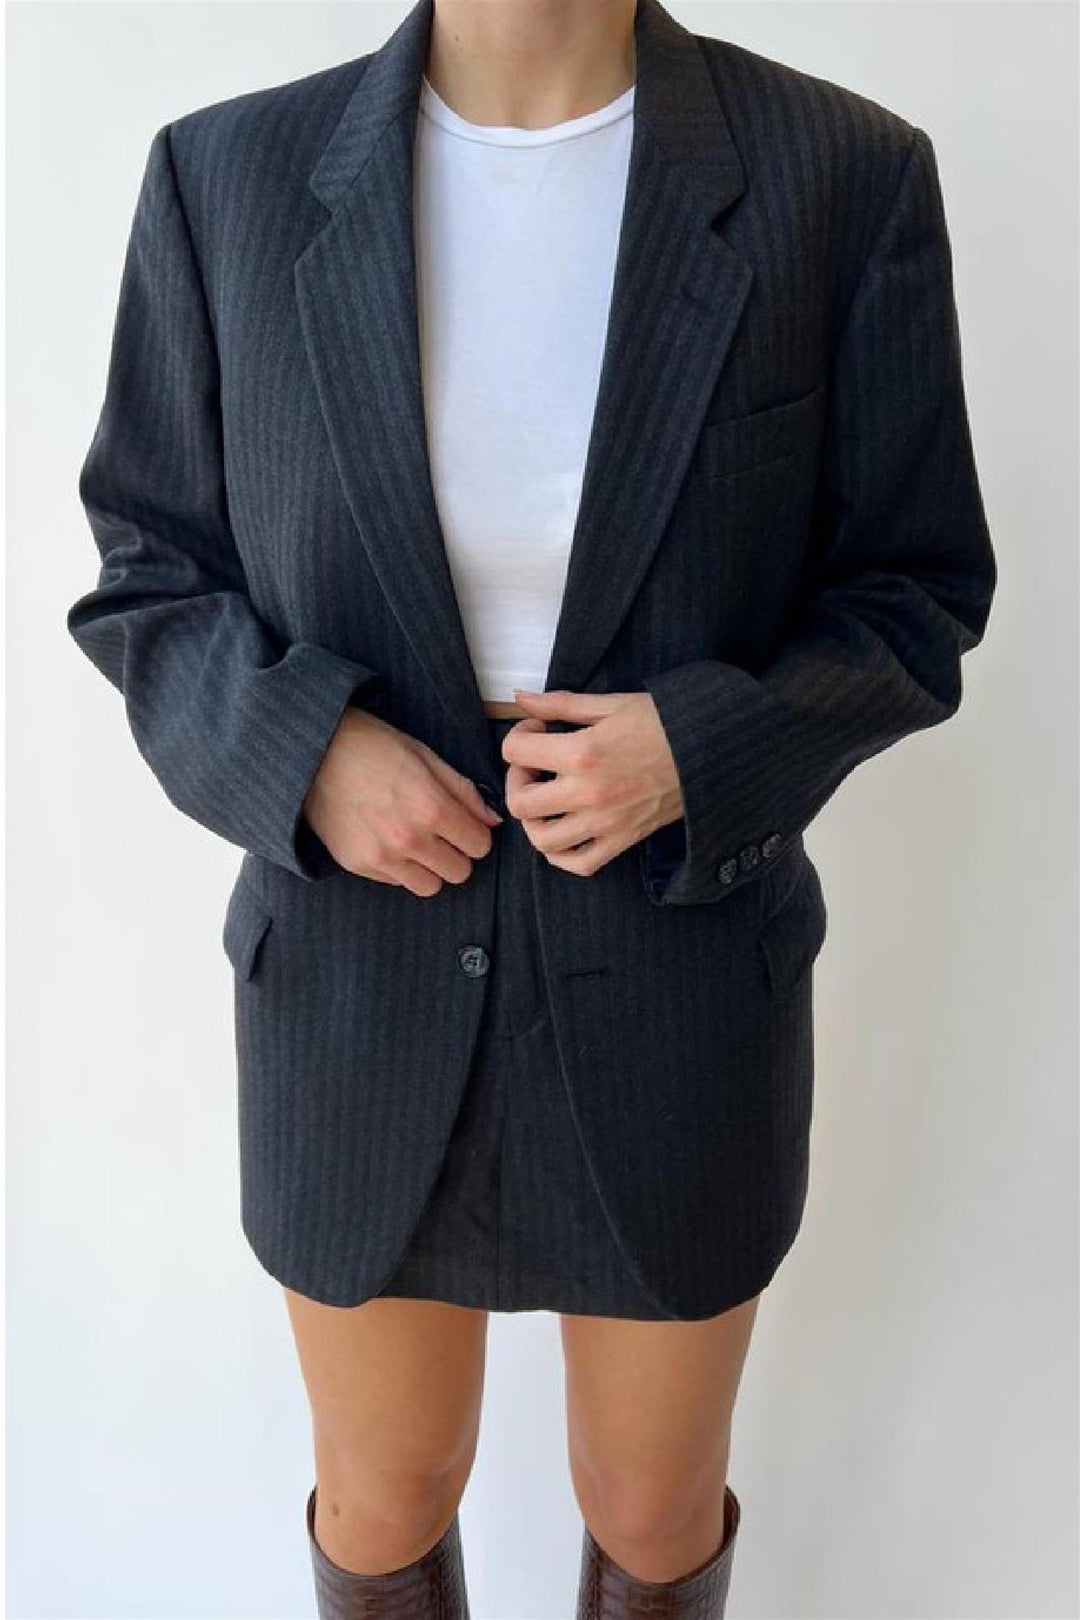 Mini Skirt Suit LBS143 Size 38